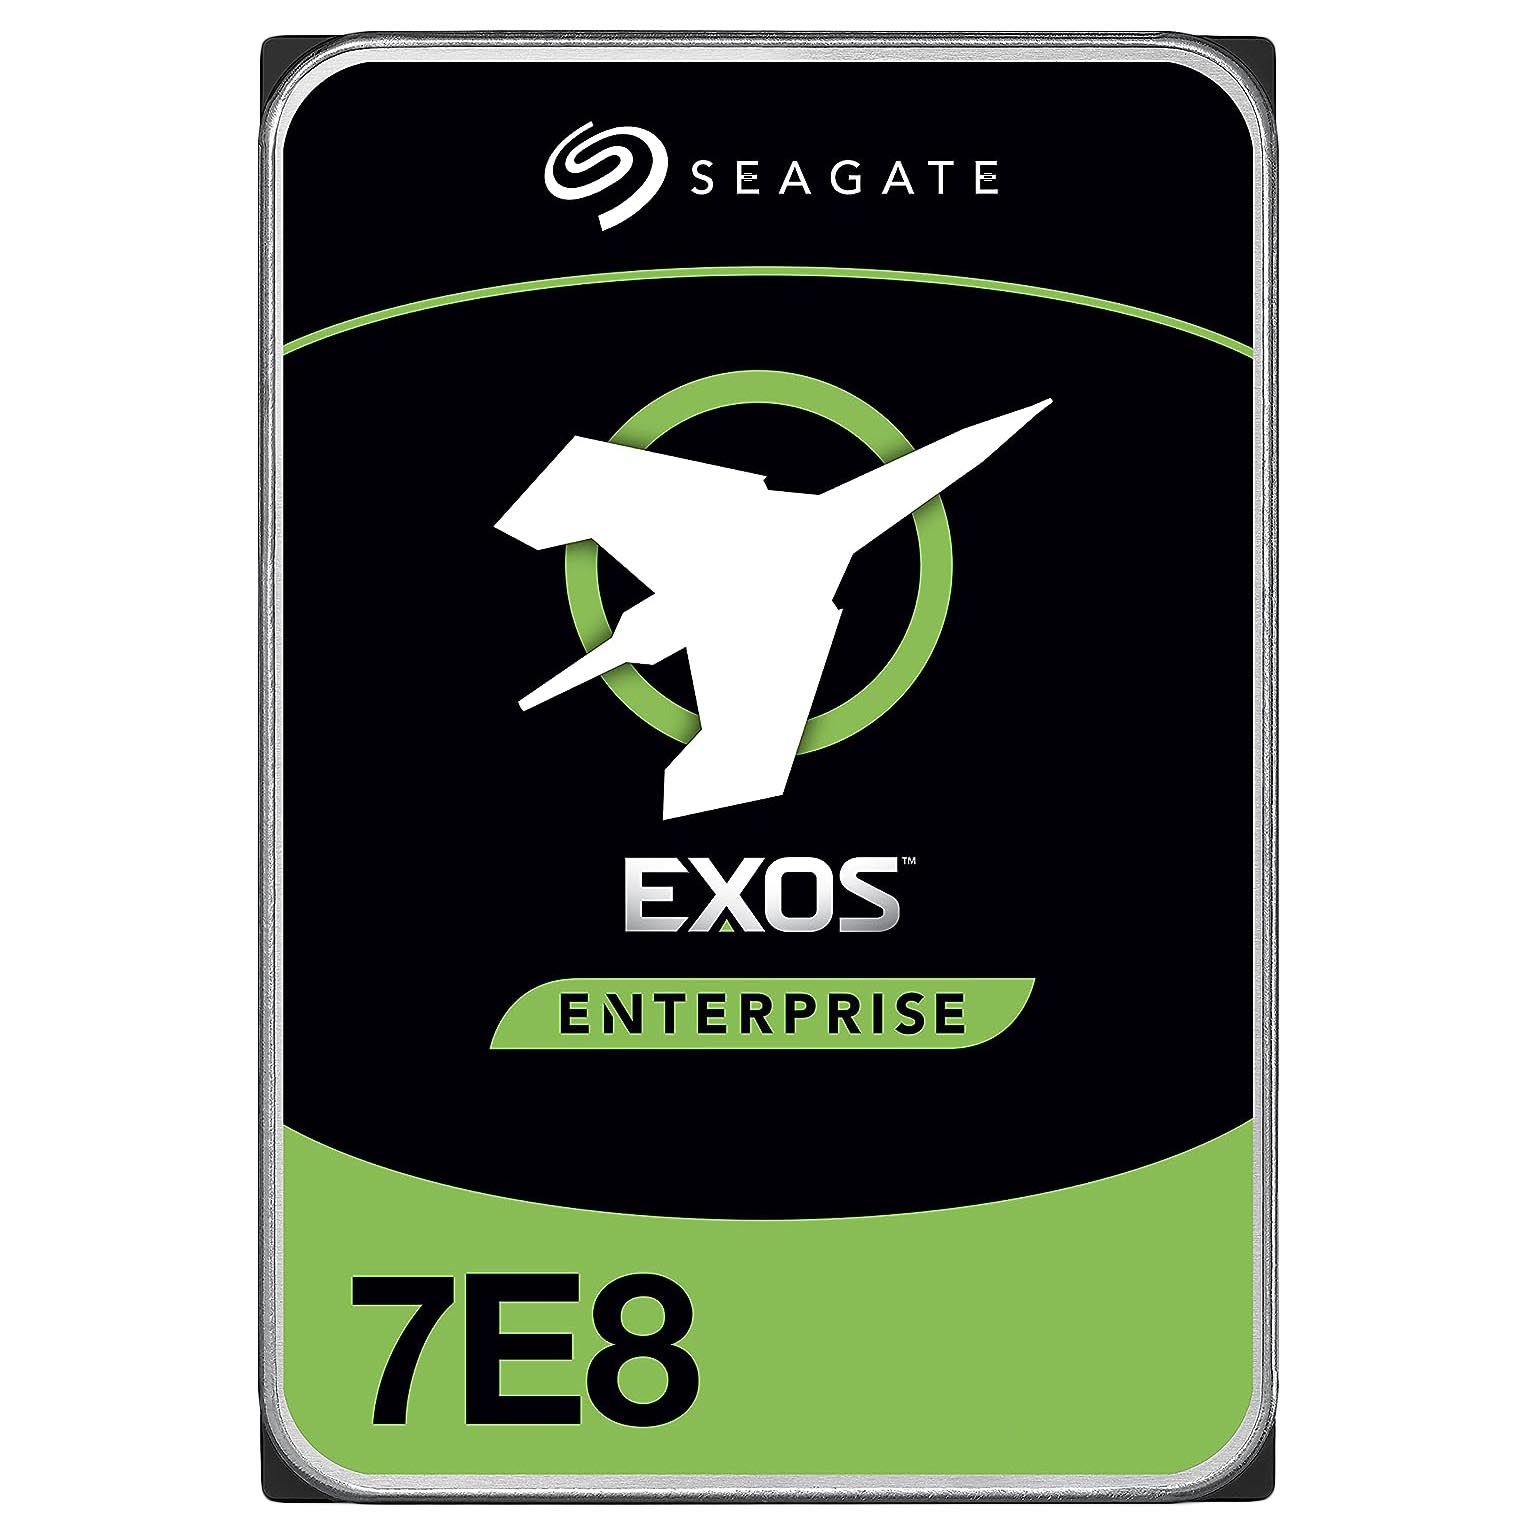 Внутренний жесткий диск Seagate Exos 7E8 512n, ST4000NM0035, 4 Тб жесткий диск seagate exos 7e8 8 тб 3 5 st8000nm000a